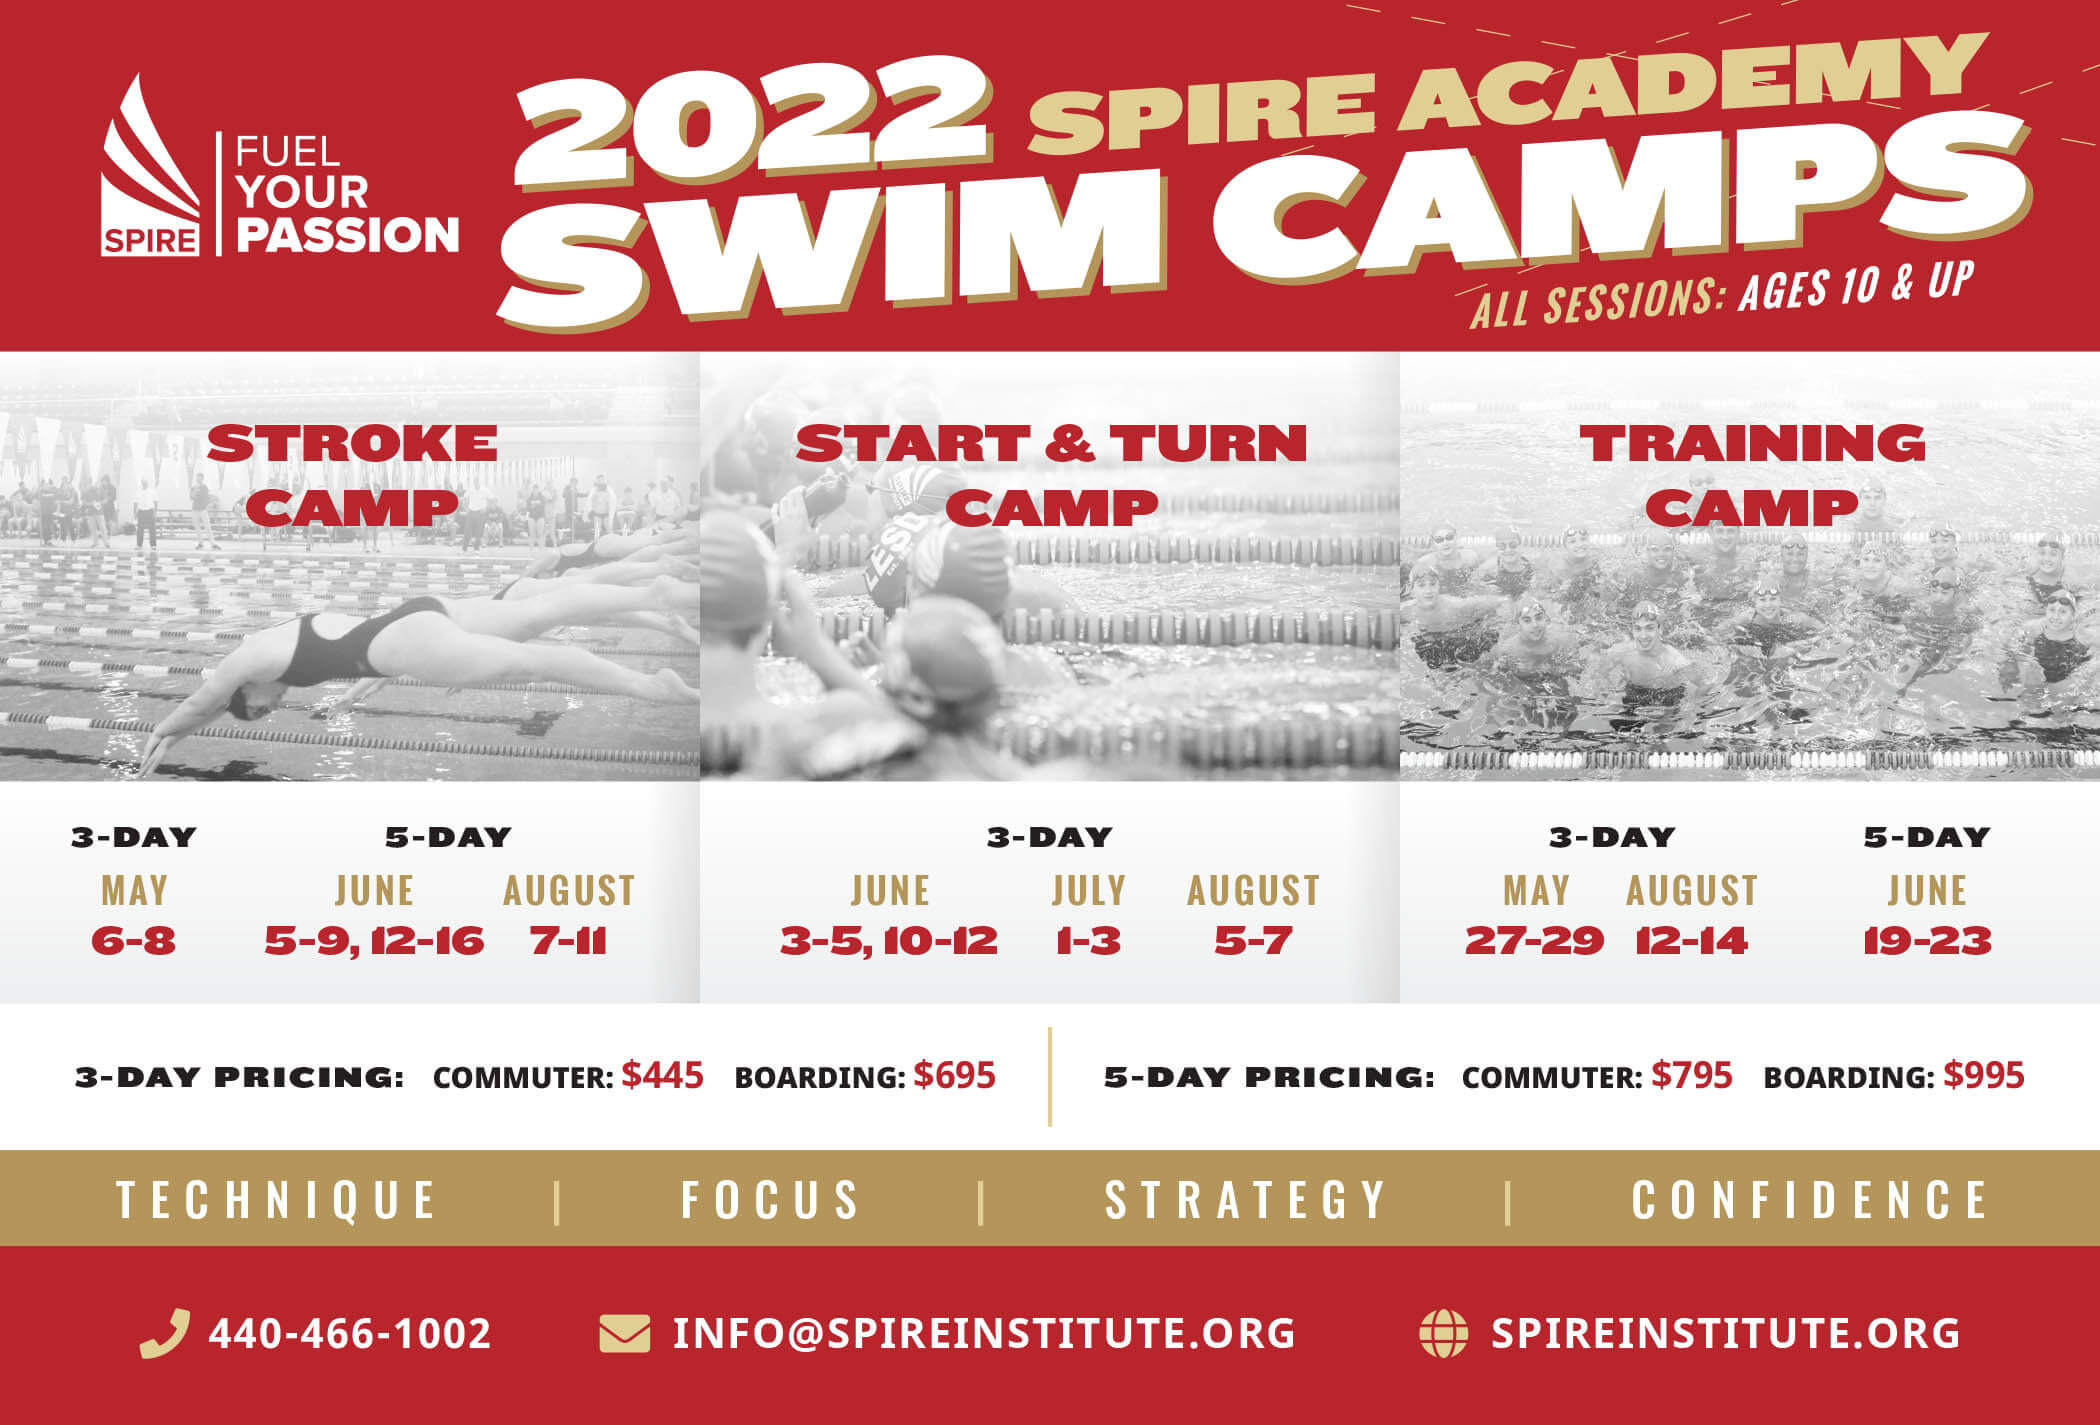 Swim Camp ad 2022 Spire Academy 